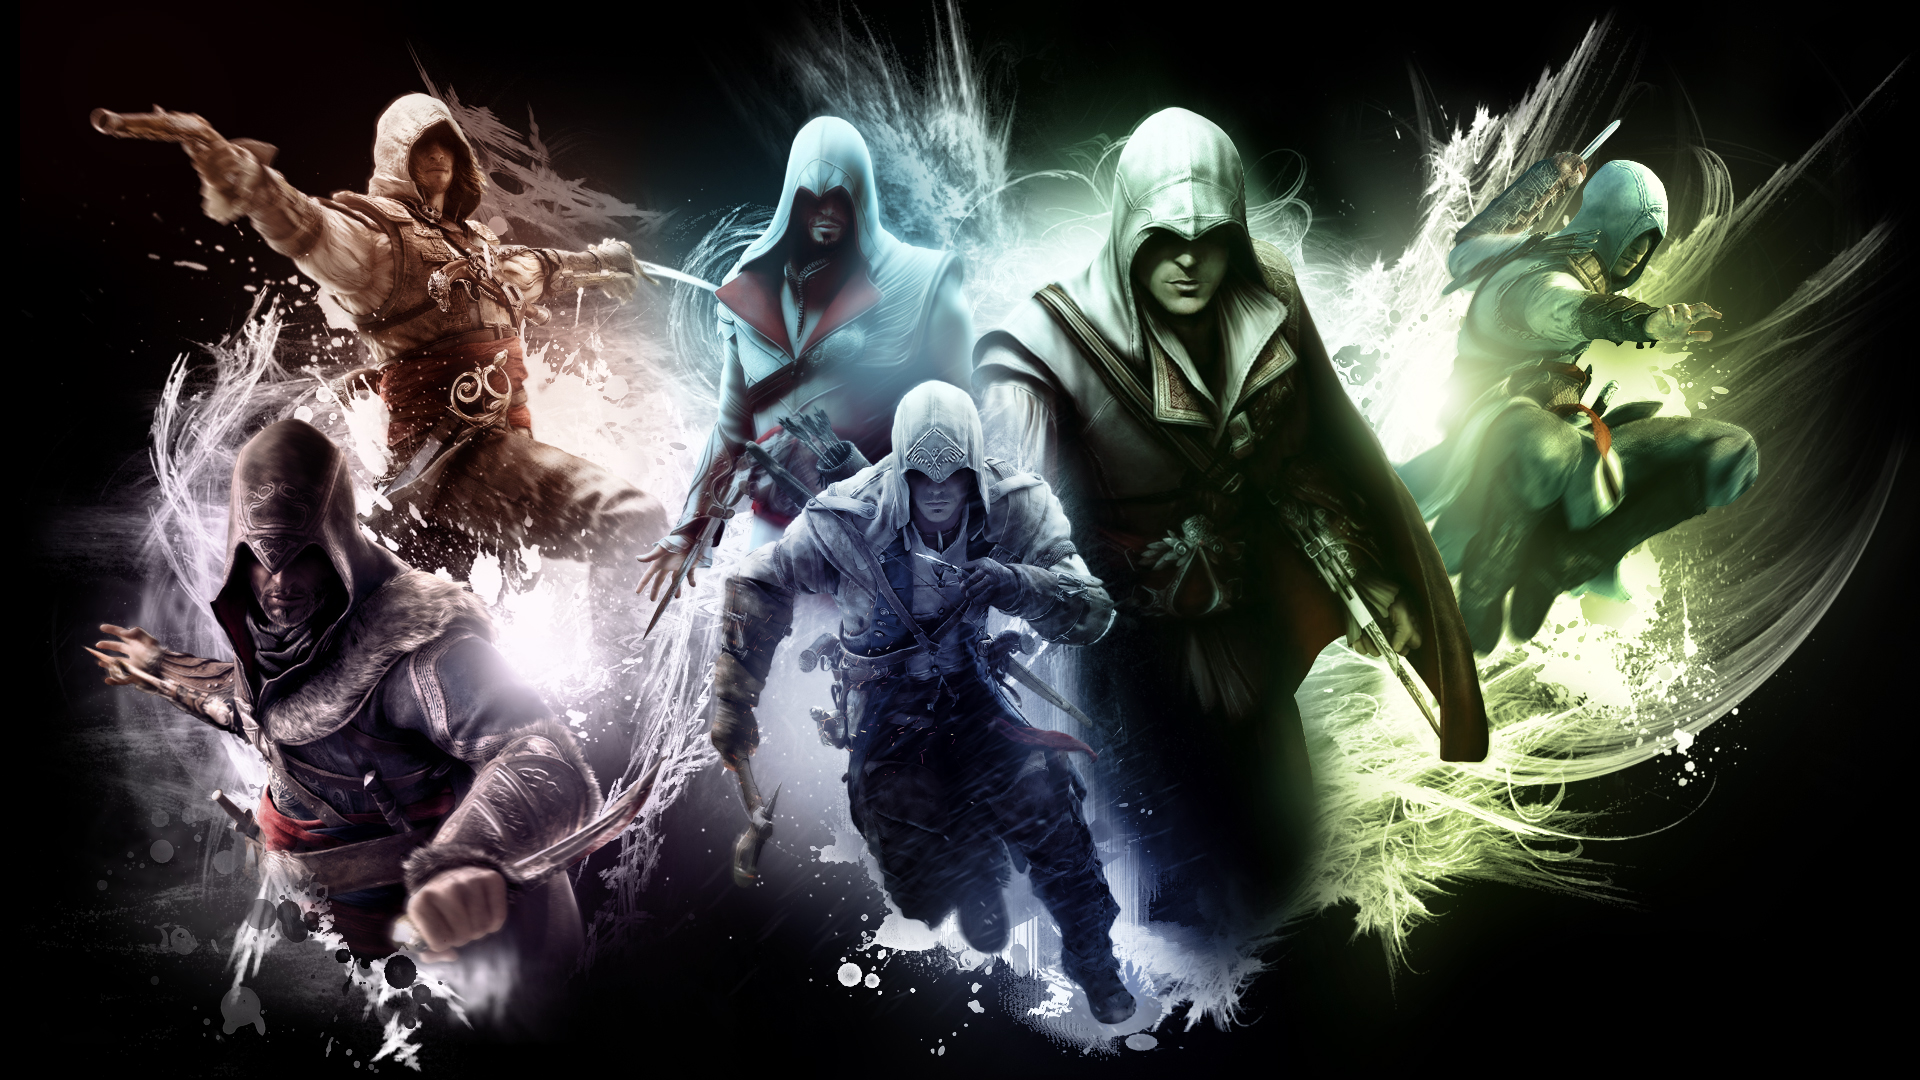 assassin creed hd wallpaper 1080p,cg kunstwerk,action adventure spiel,dunkelheit,grafikdesign,erfundener charakter